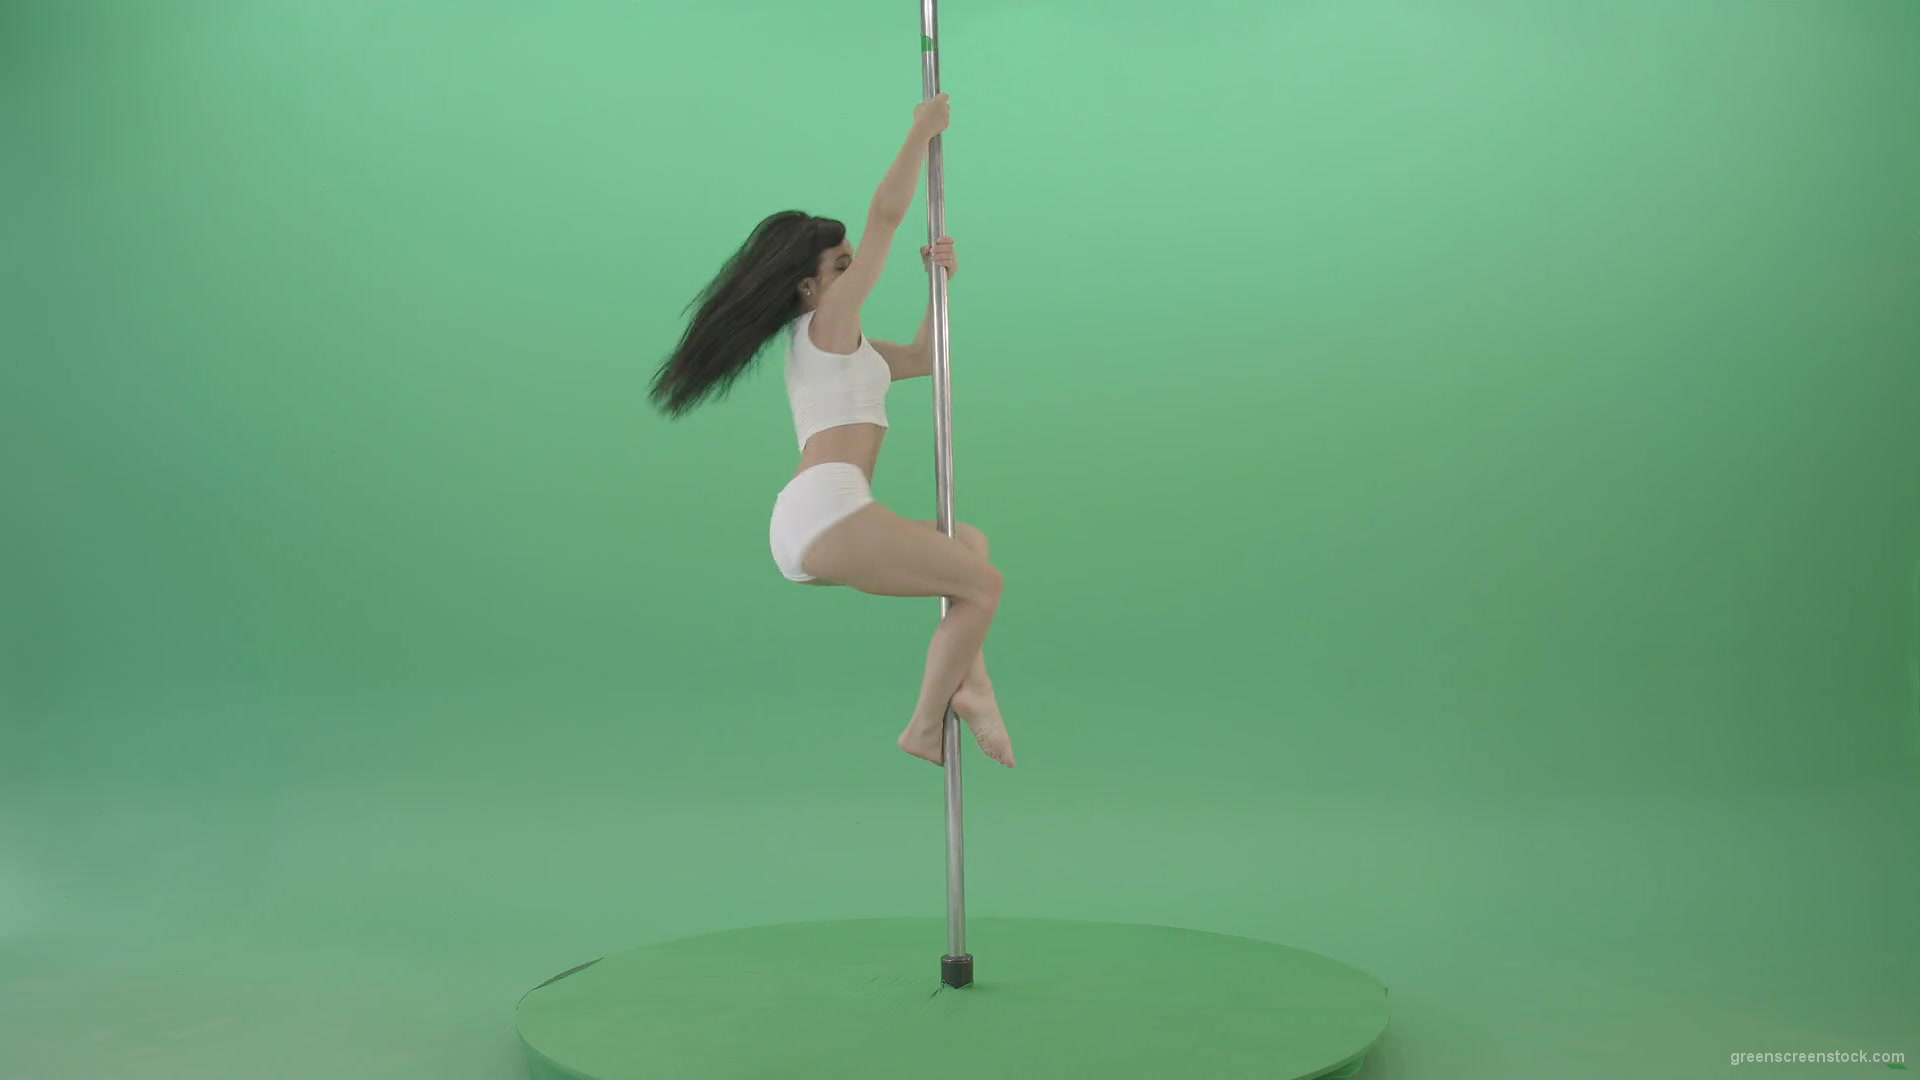 Pole-dance-trainer-girl-has-a-sport-flight-on-green-screen-4K-Video-Footage-1920_004 Green Screen Stock